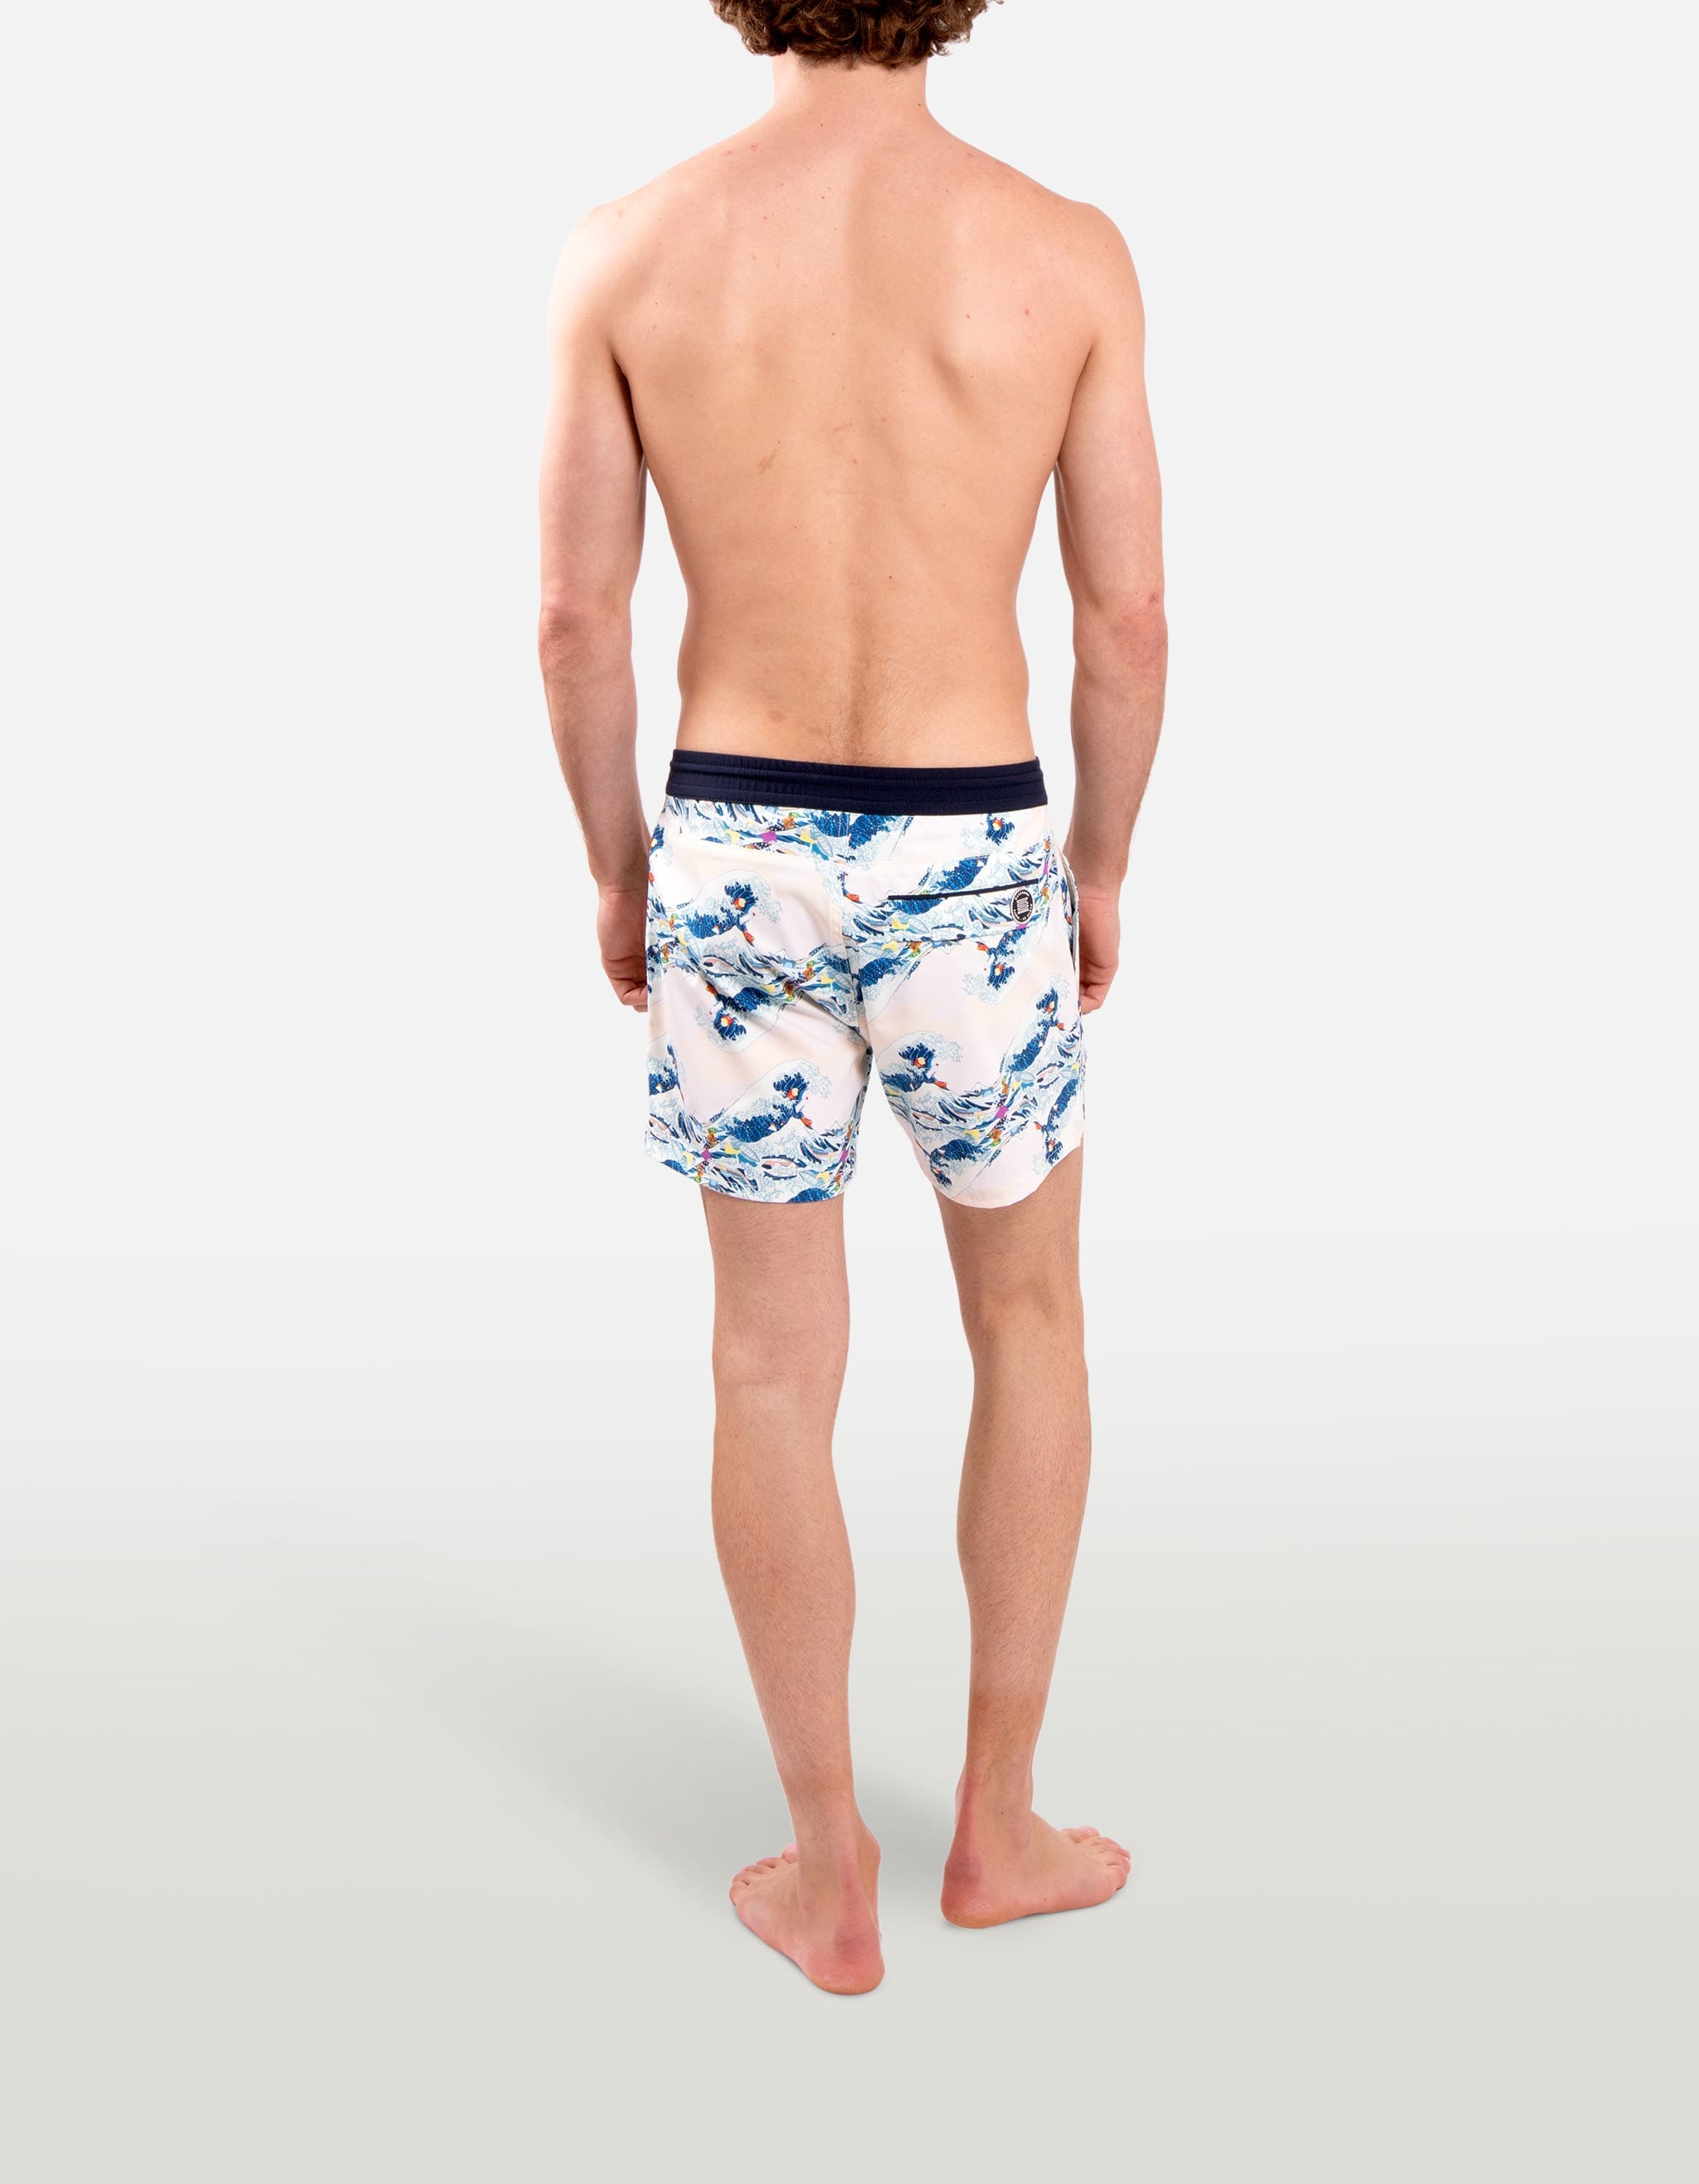 Ben - P27. Hokusad Swim Shorts - Ben MACKEENE 